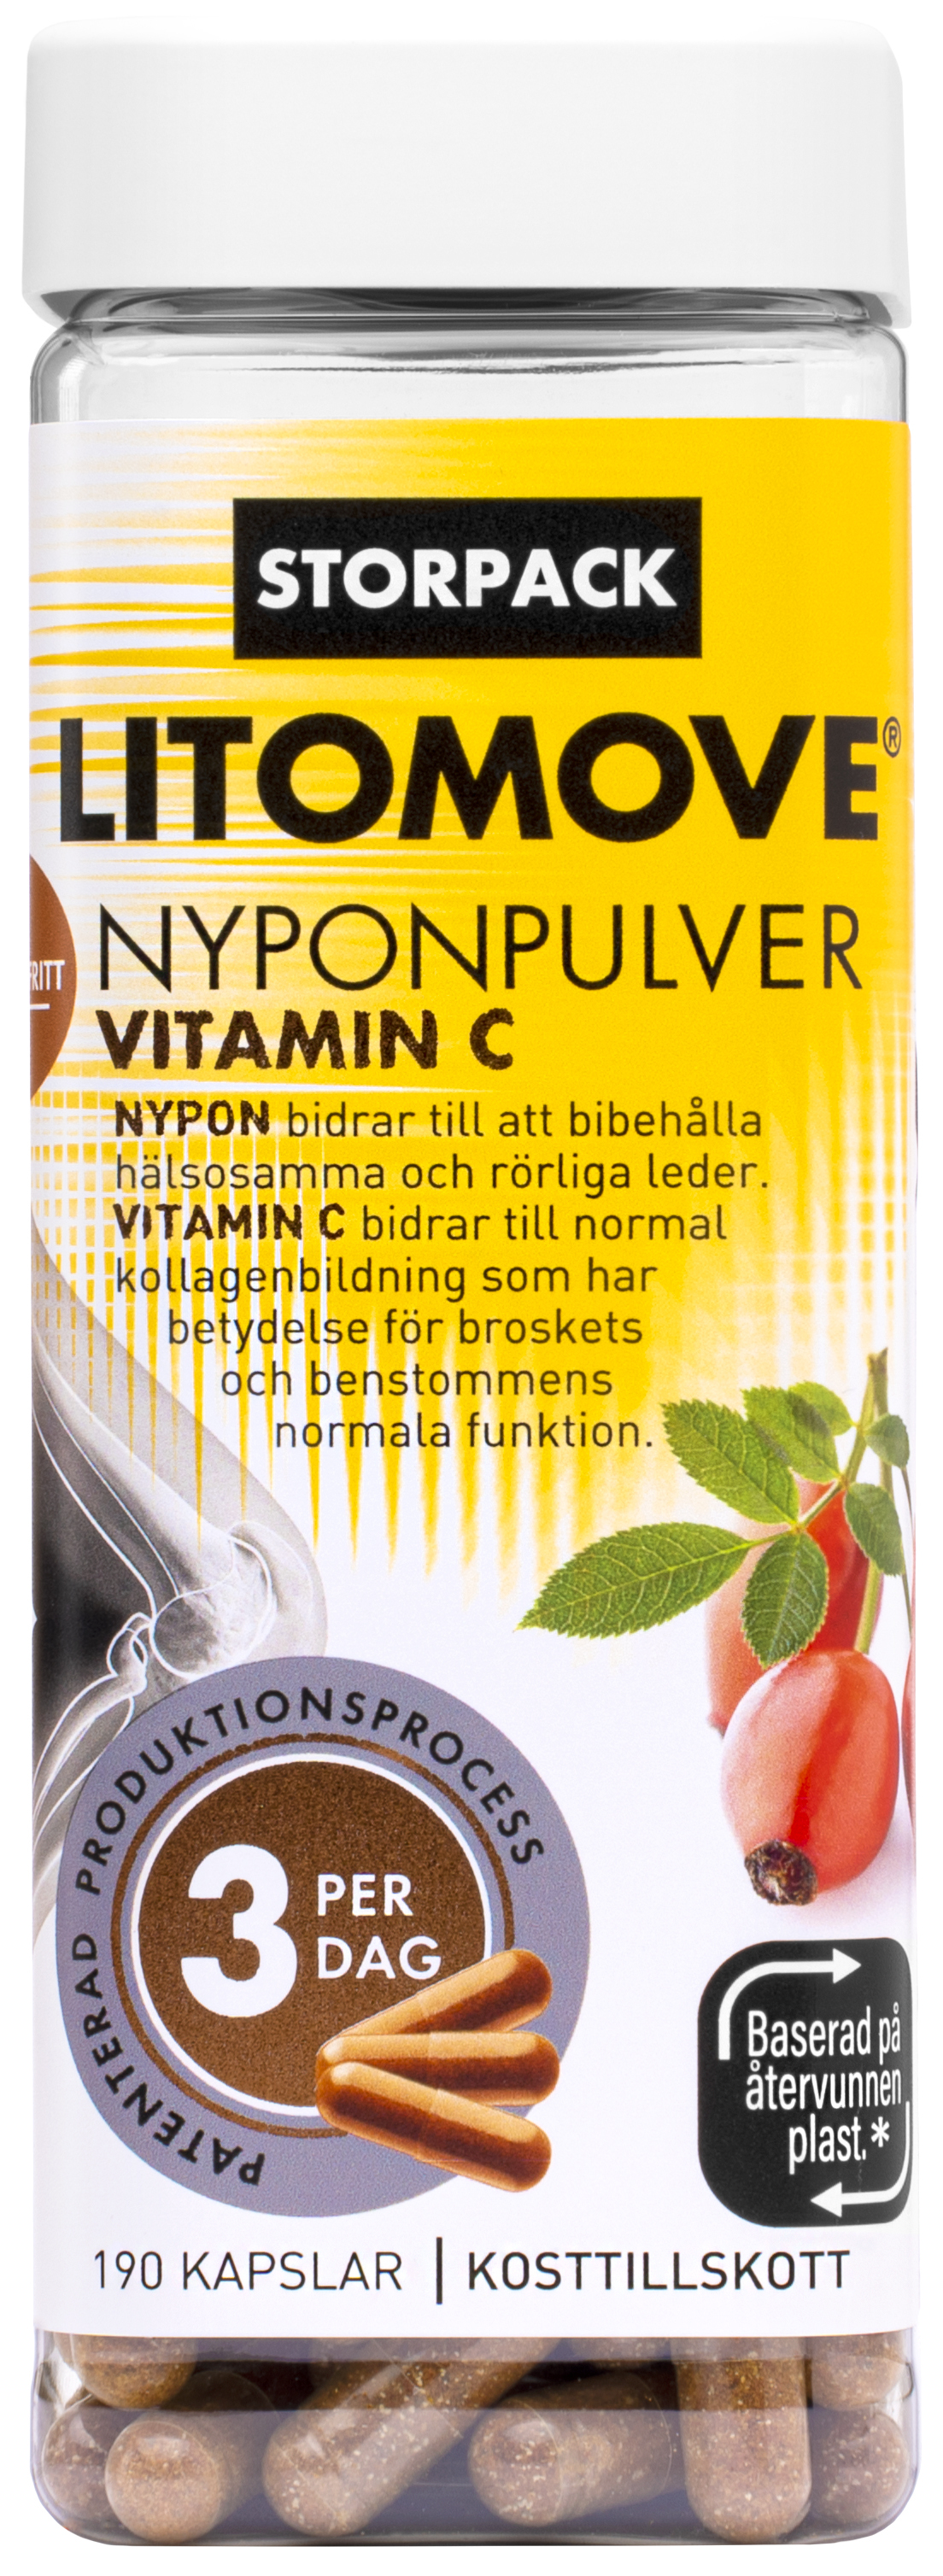 Litomove Nyponpulver Vitamin C 190 kapslar